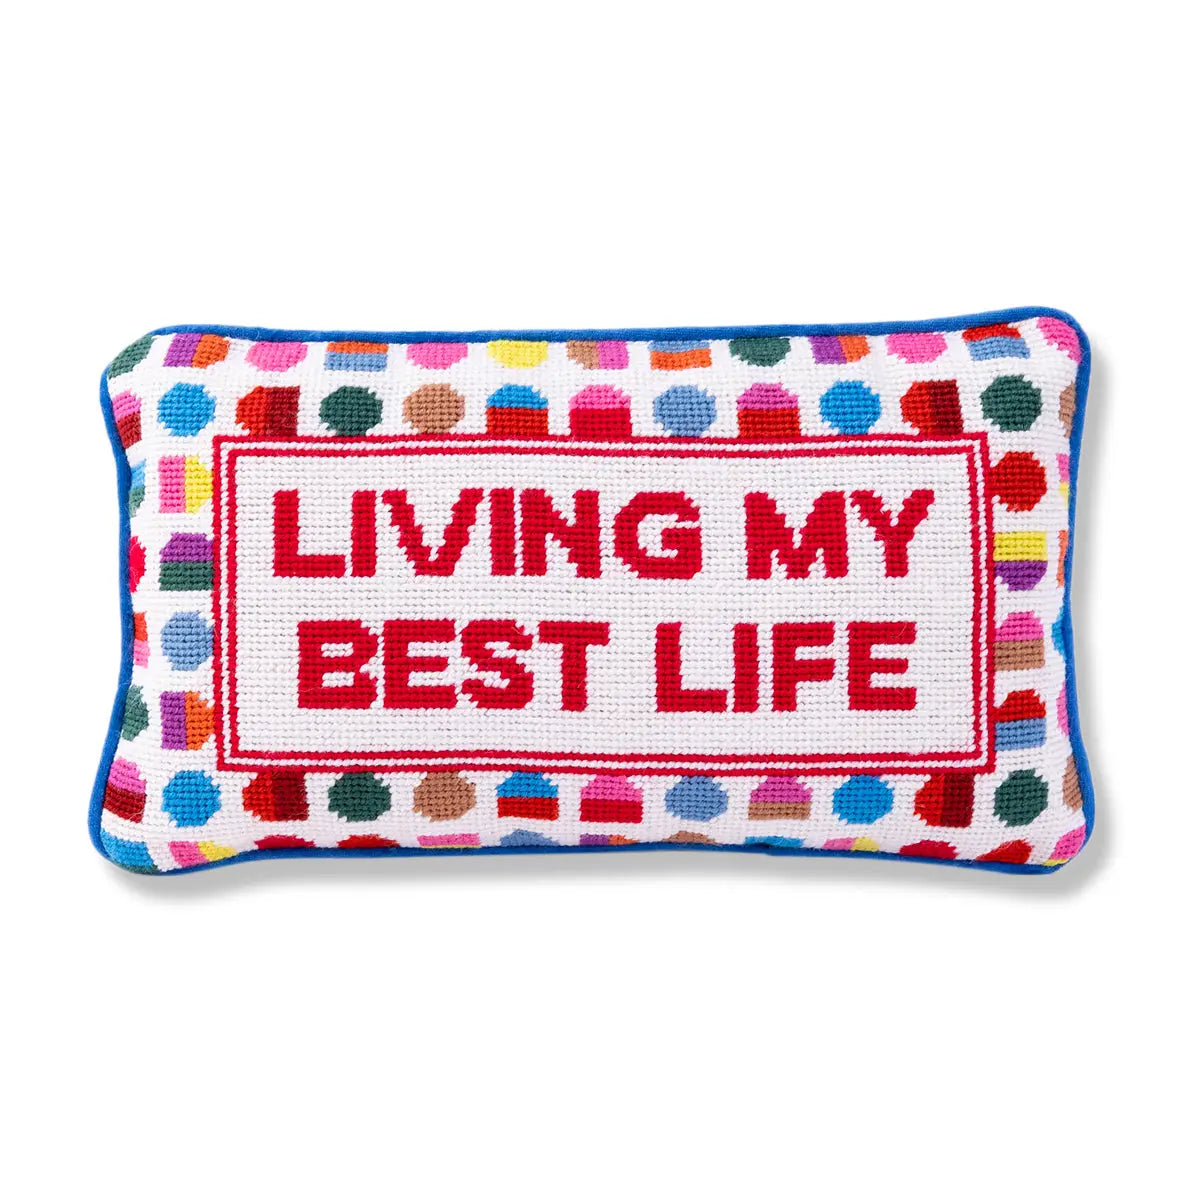 Living My Best Life Needlepoint Pillow